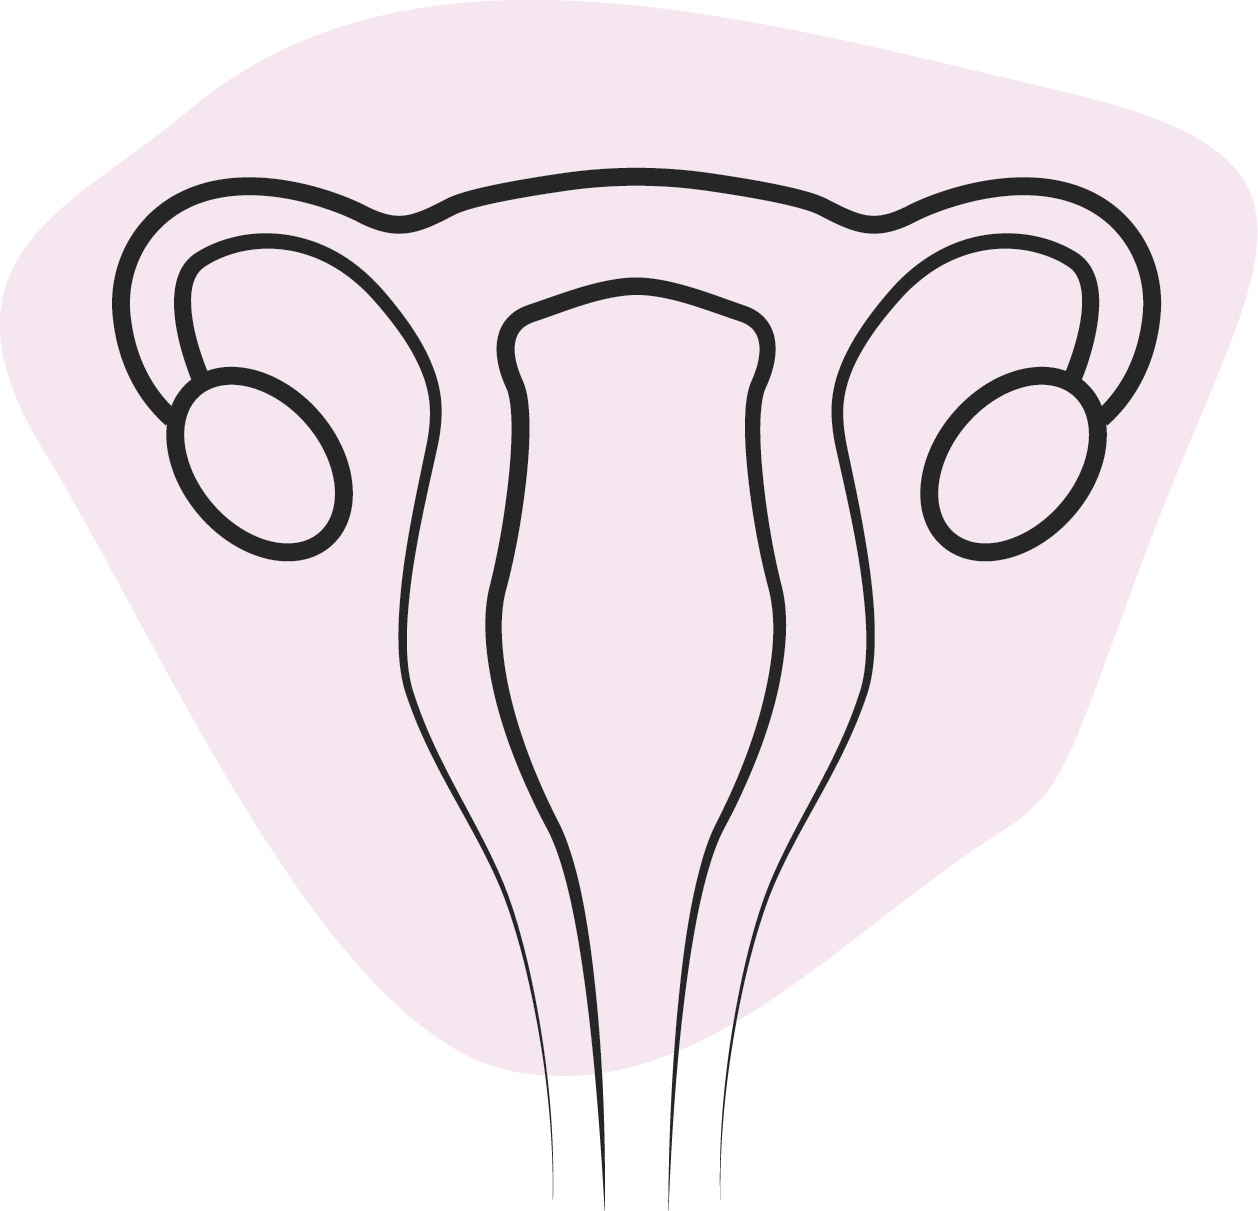 Obstetrică și ginecologie